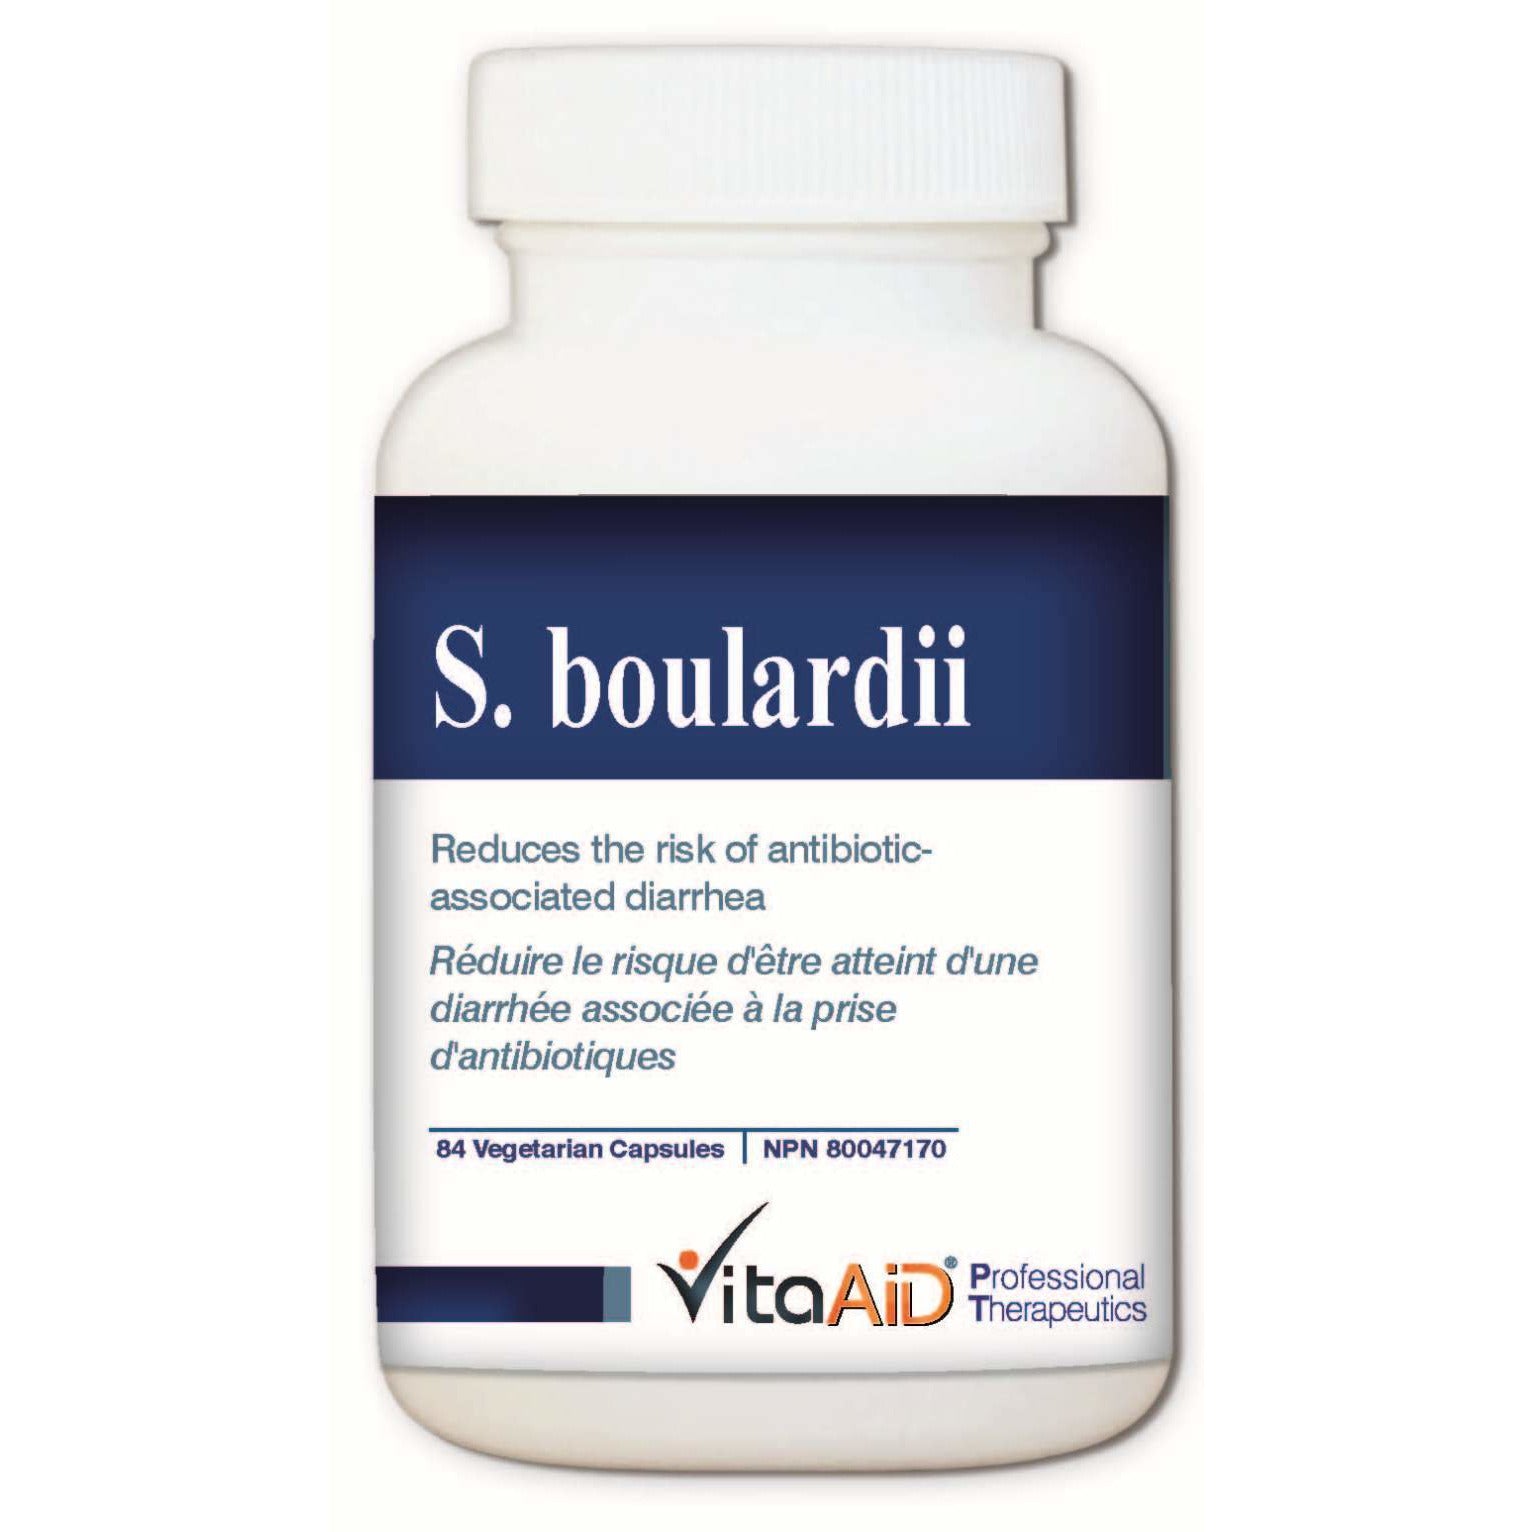 S. boulardii  Reduces the Risk of Antibiotic-Associated Diarrhea, Acute Traveler's Diarrhea, C. difficile Infections, and H. pylori. 84 veg caps